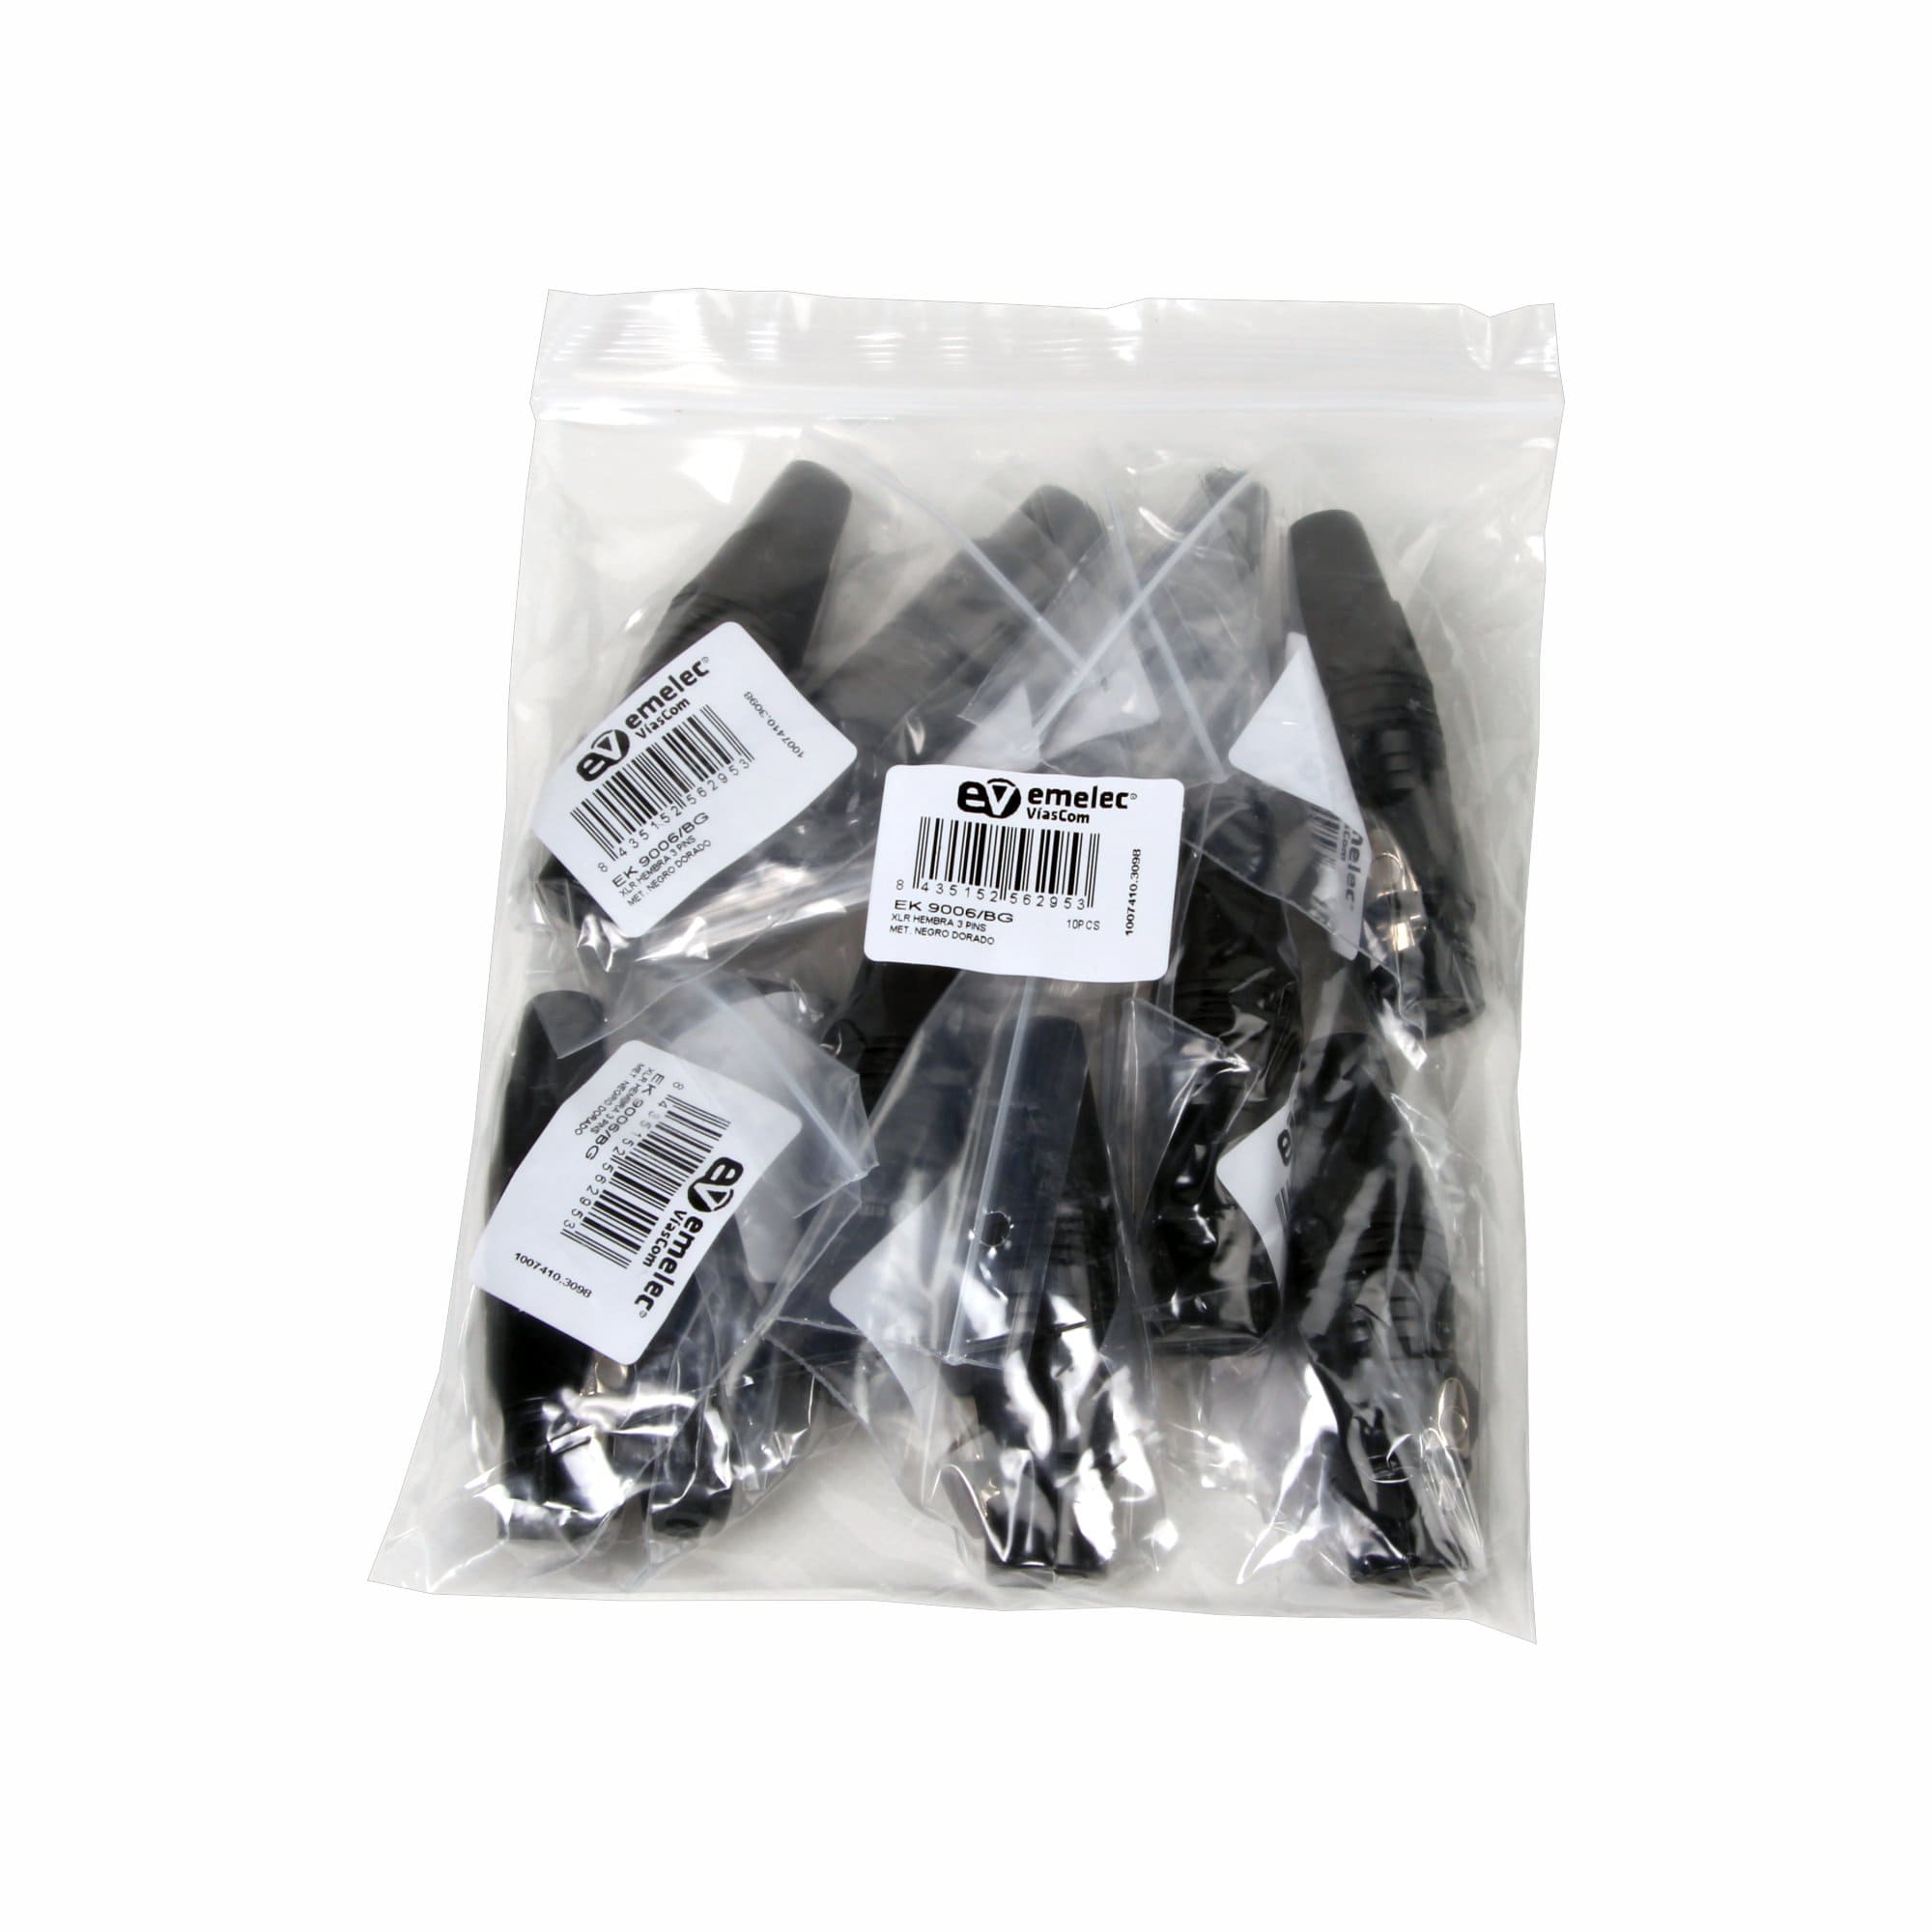 Plastic bag with 10 black XLR Female Connectors from Emelec ViaCom